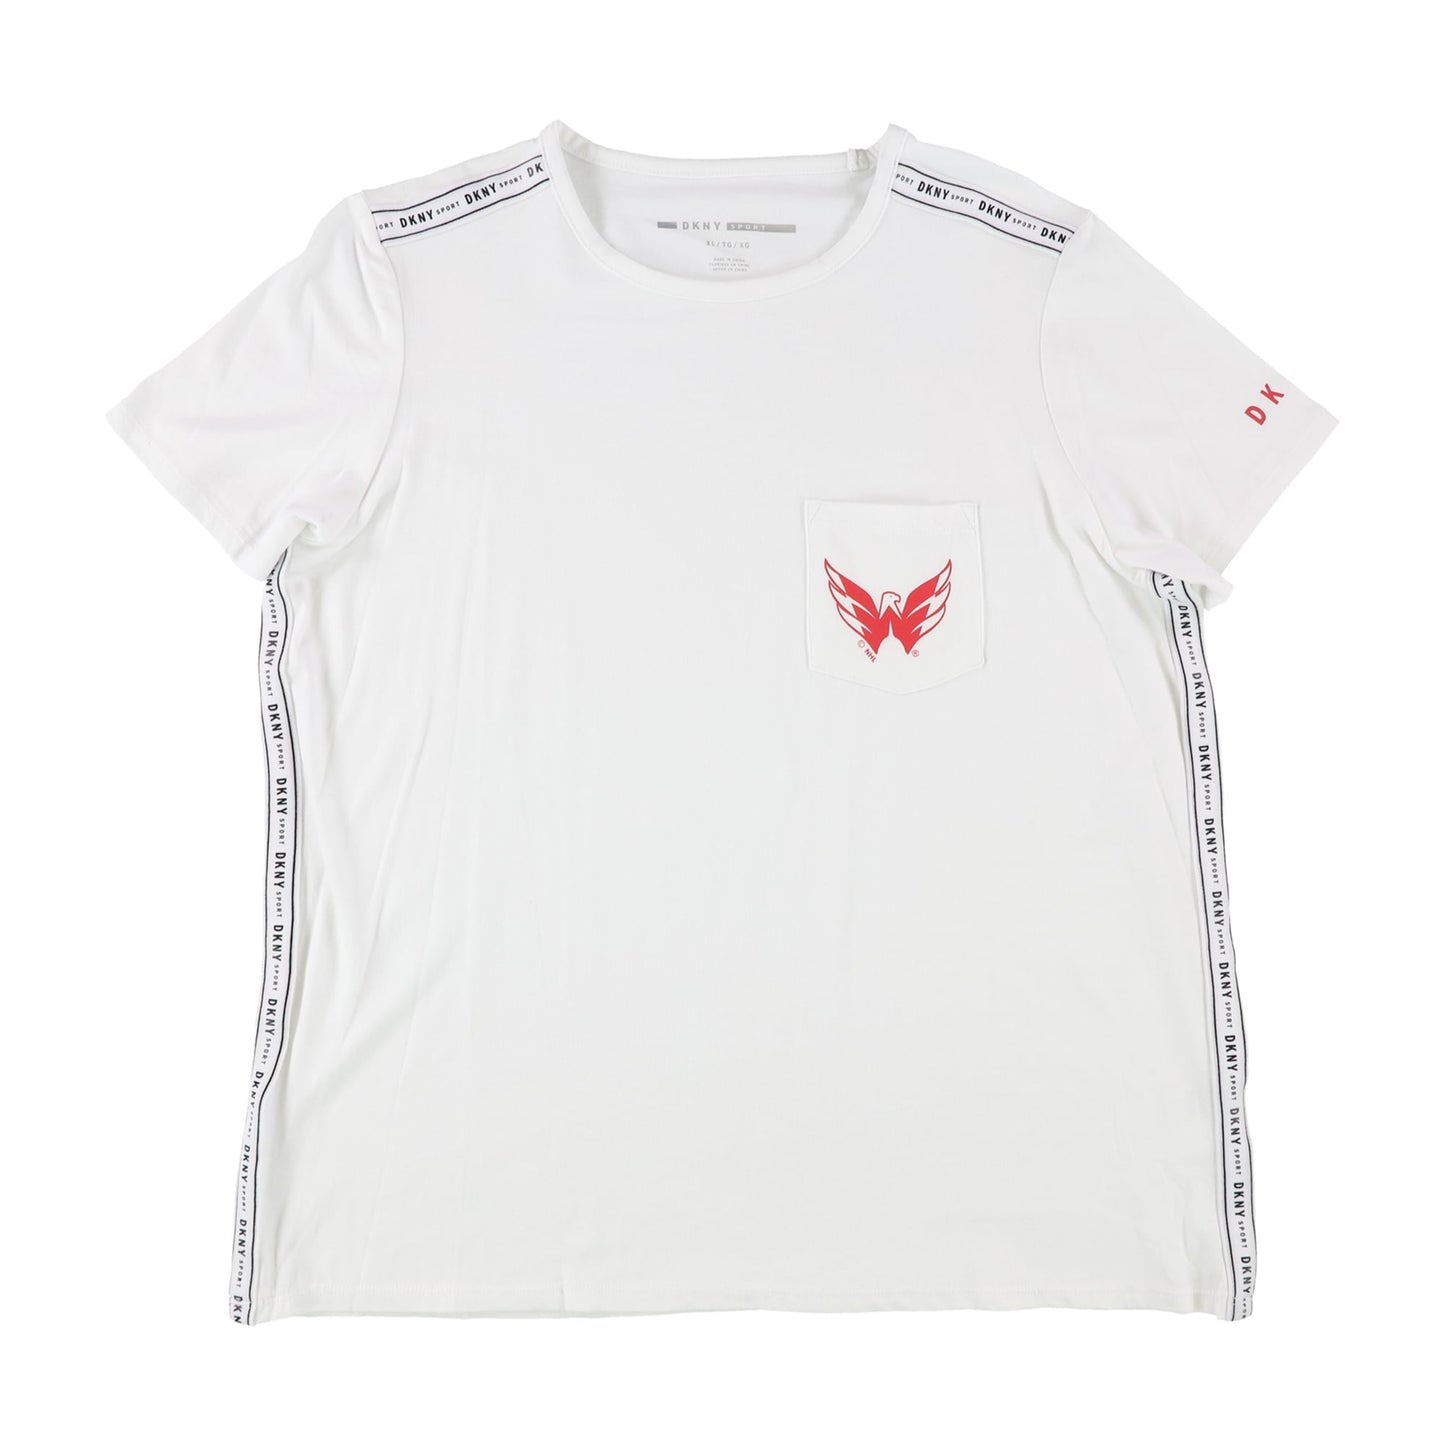 DKNY Womens Washington Capitals Graphic T-Shirt, White, Medium